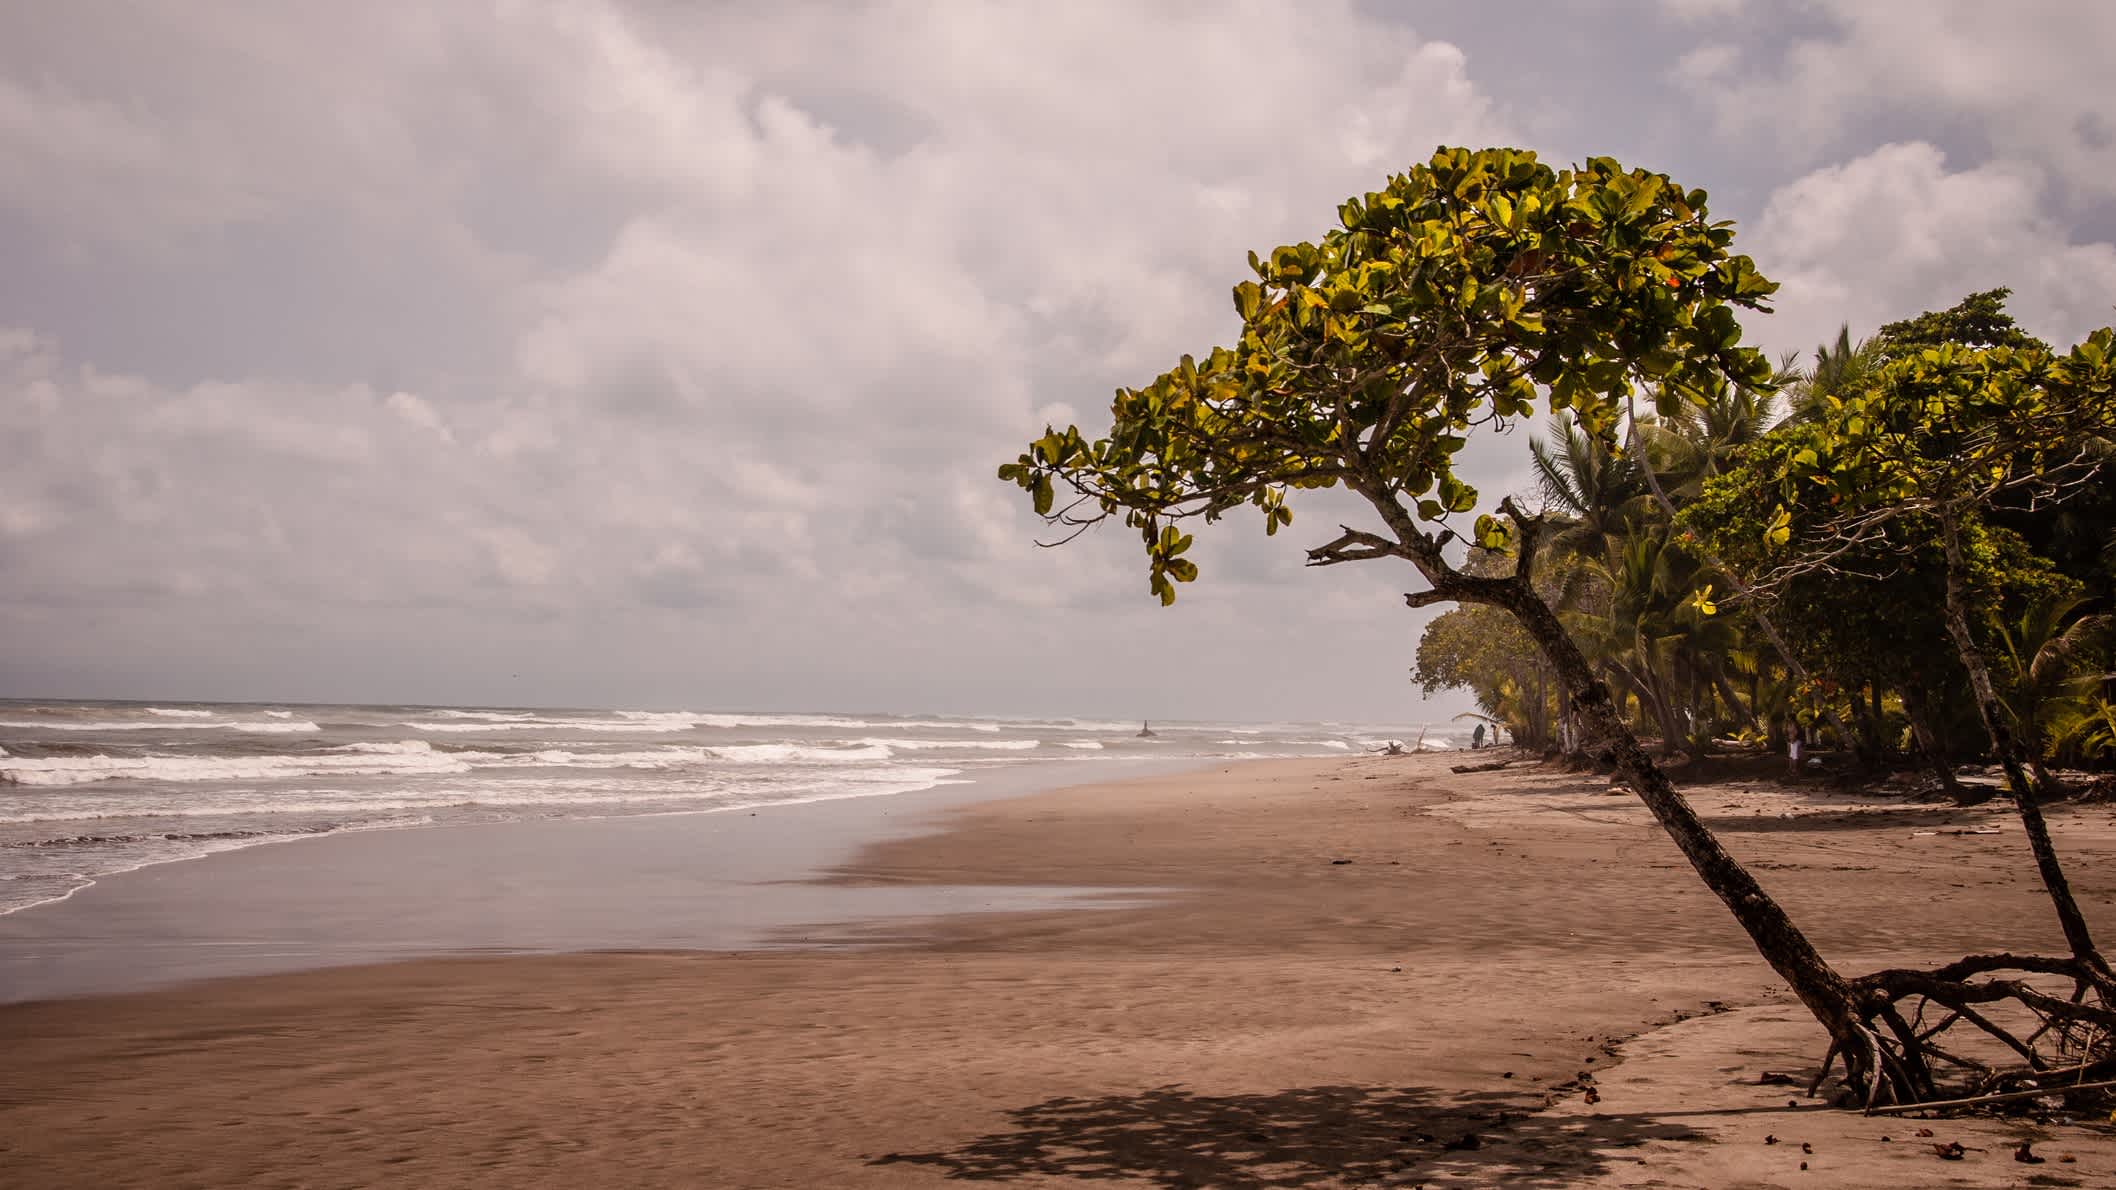 Journée nuageuse sur la plage d'Esterillos au Costa Rica